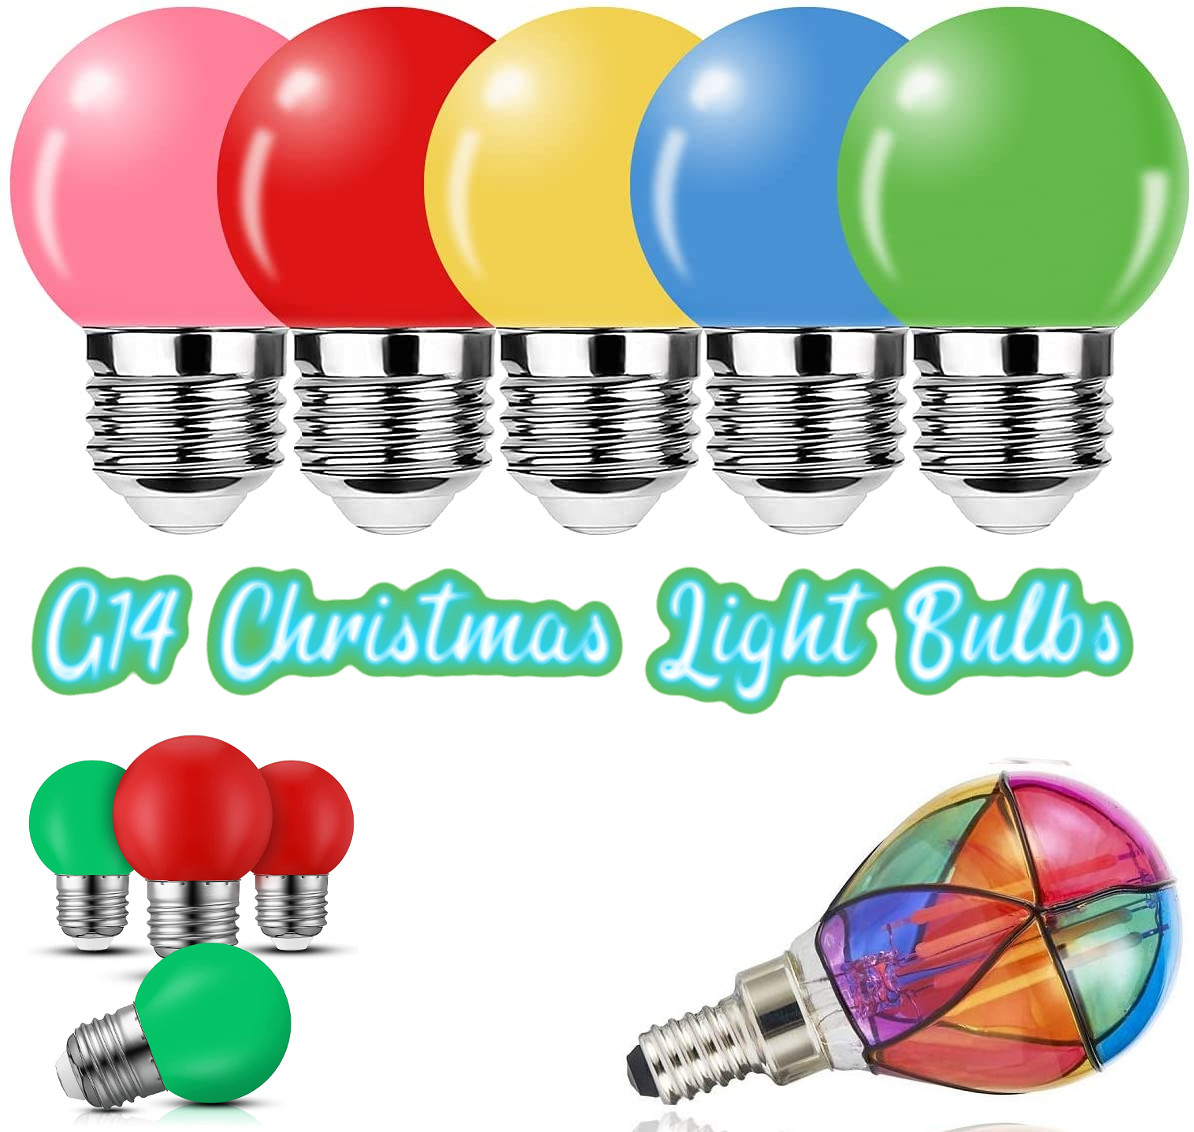 G14 Christmas Light Bulbs